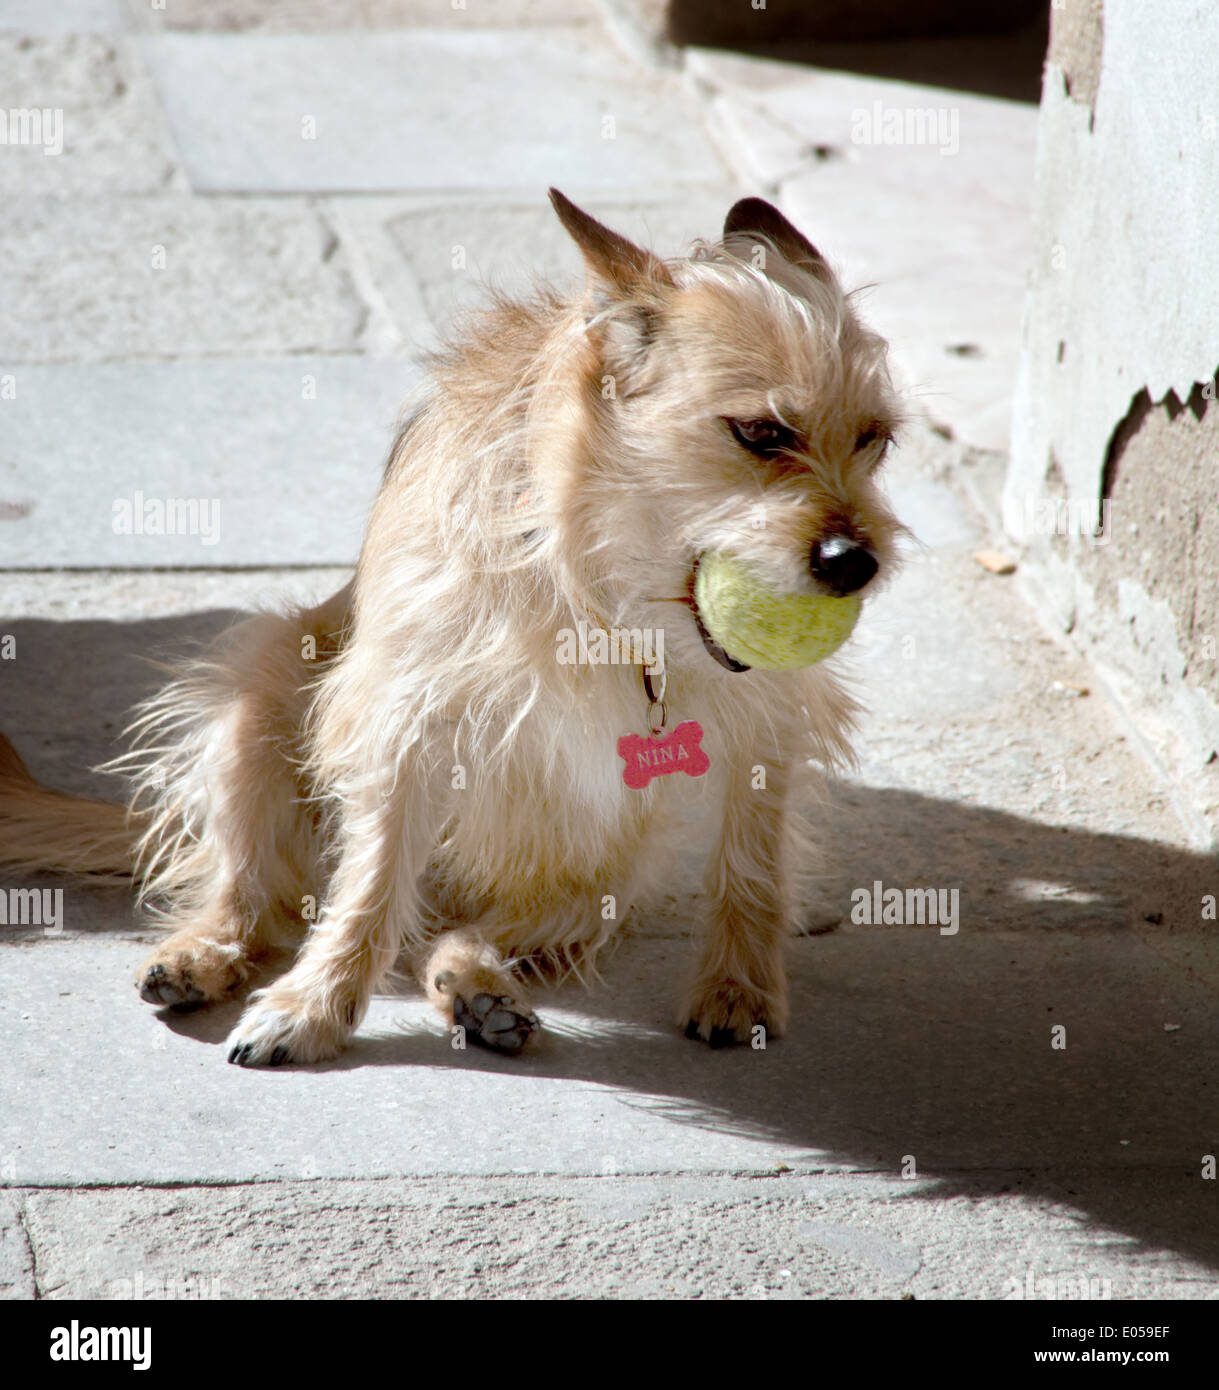 Dog with ball, Hund mit Ball Stock Photo